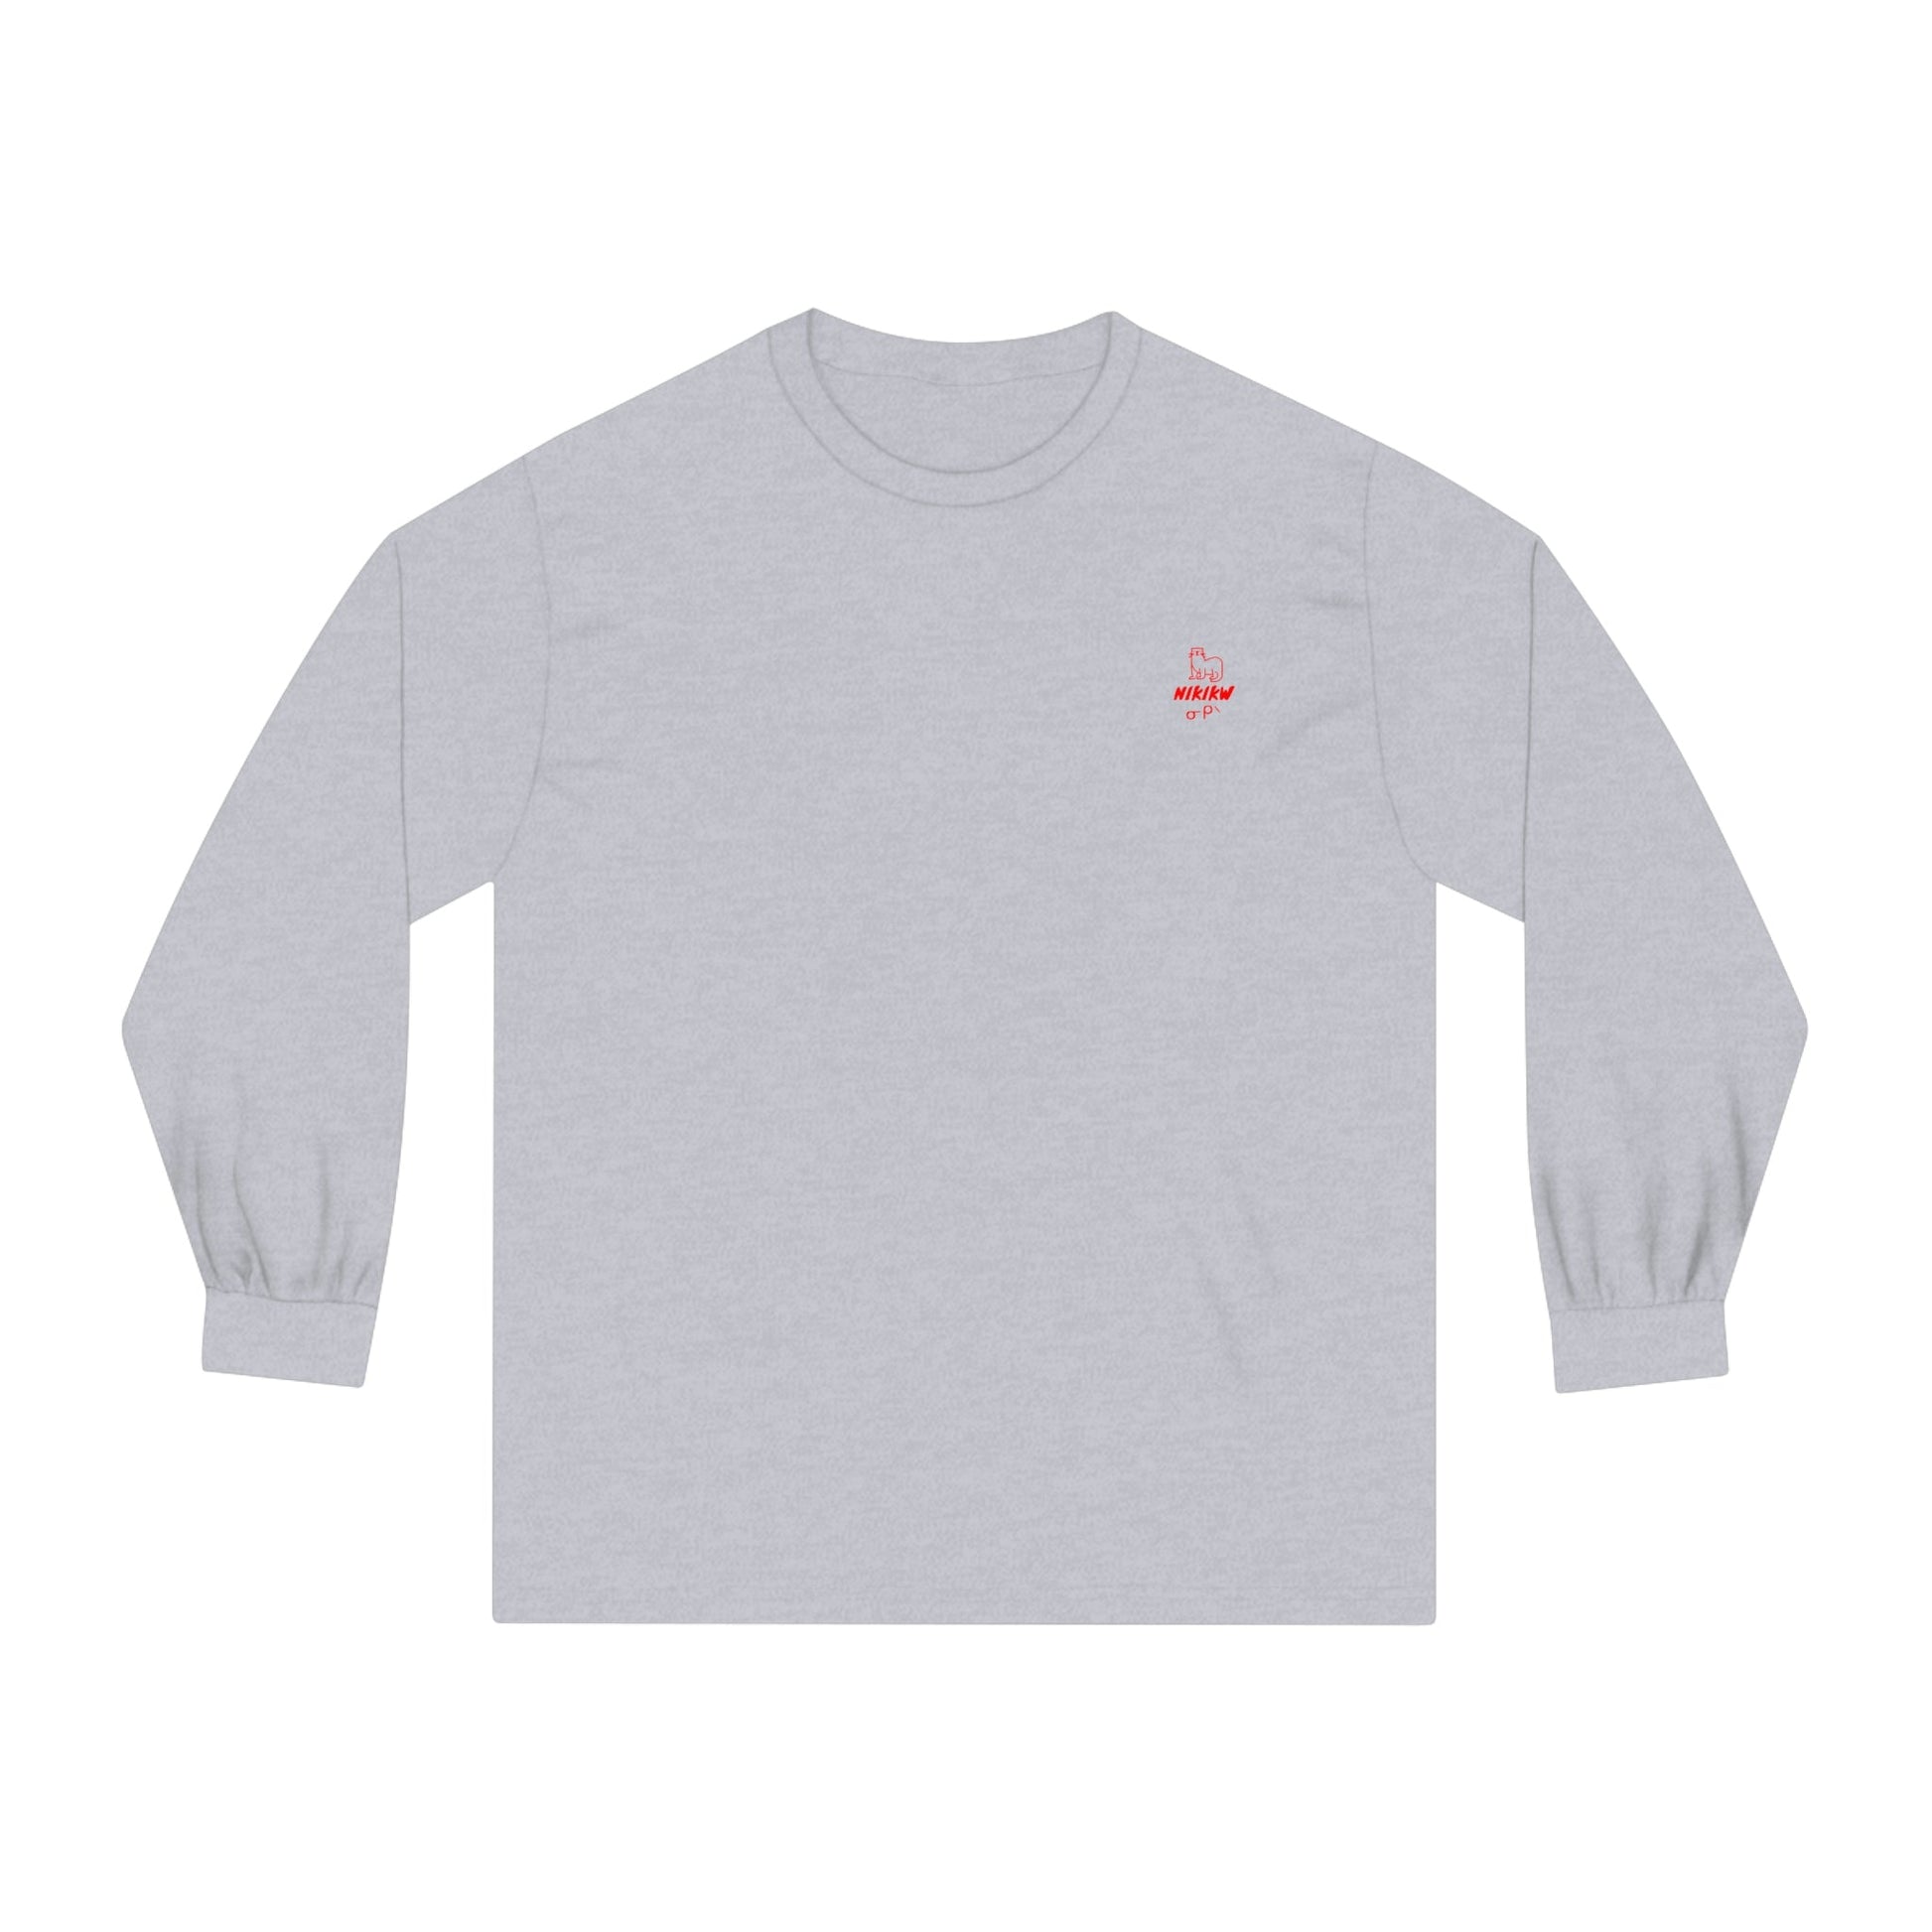 Stoodis Skater Classic Long Sleeve T-Shirt - Nikikw Designs